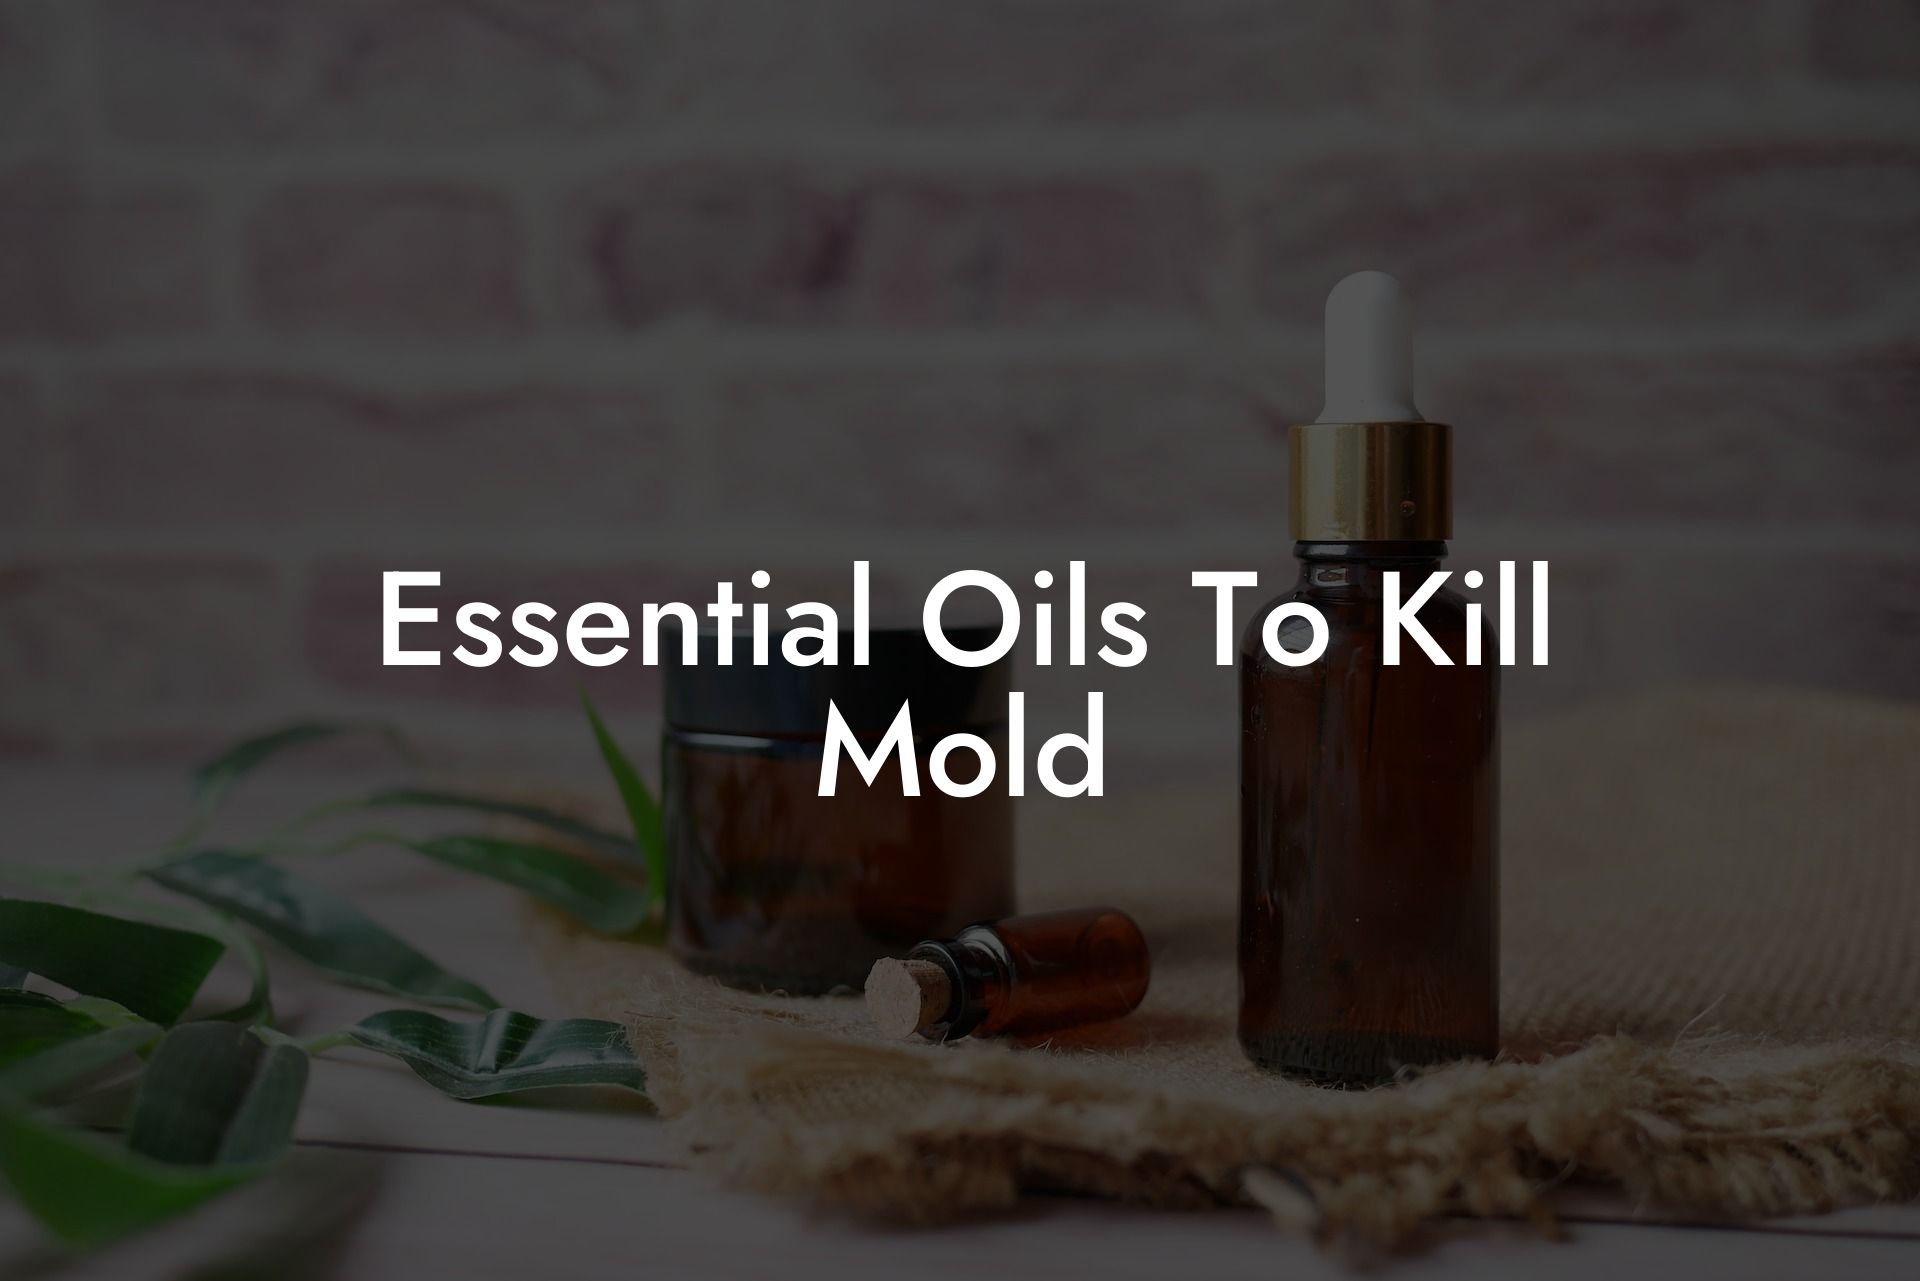 Essential Oils To Kill Mold